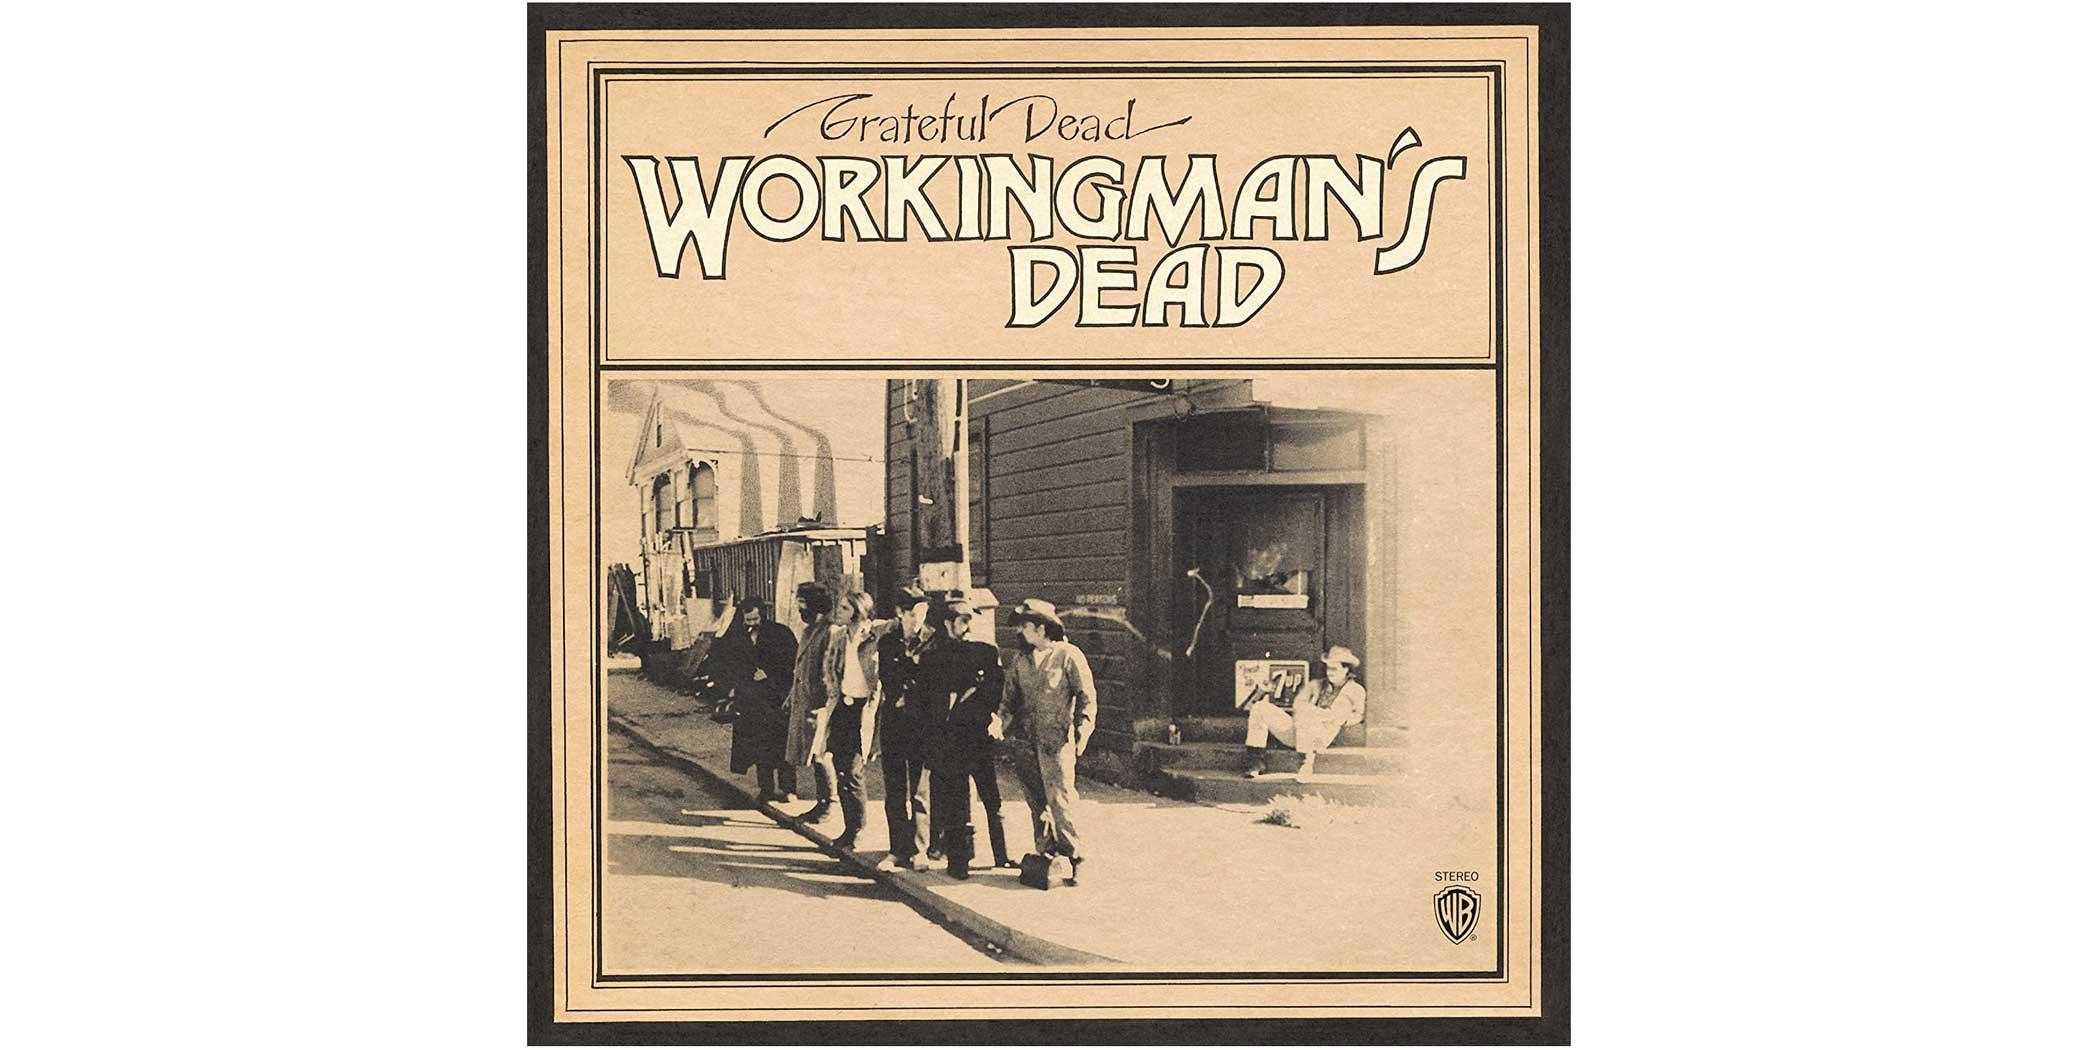 The Grateful Dead, Workingman’s Dead (50th Anniversary Edition)